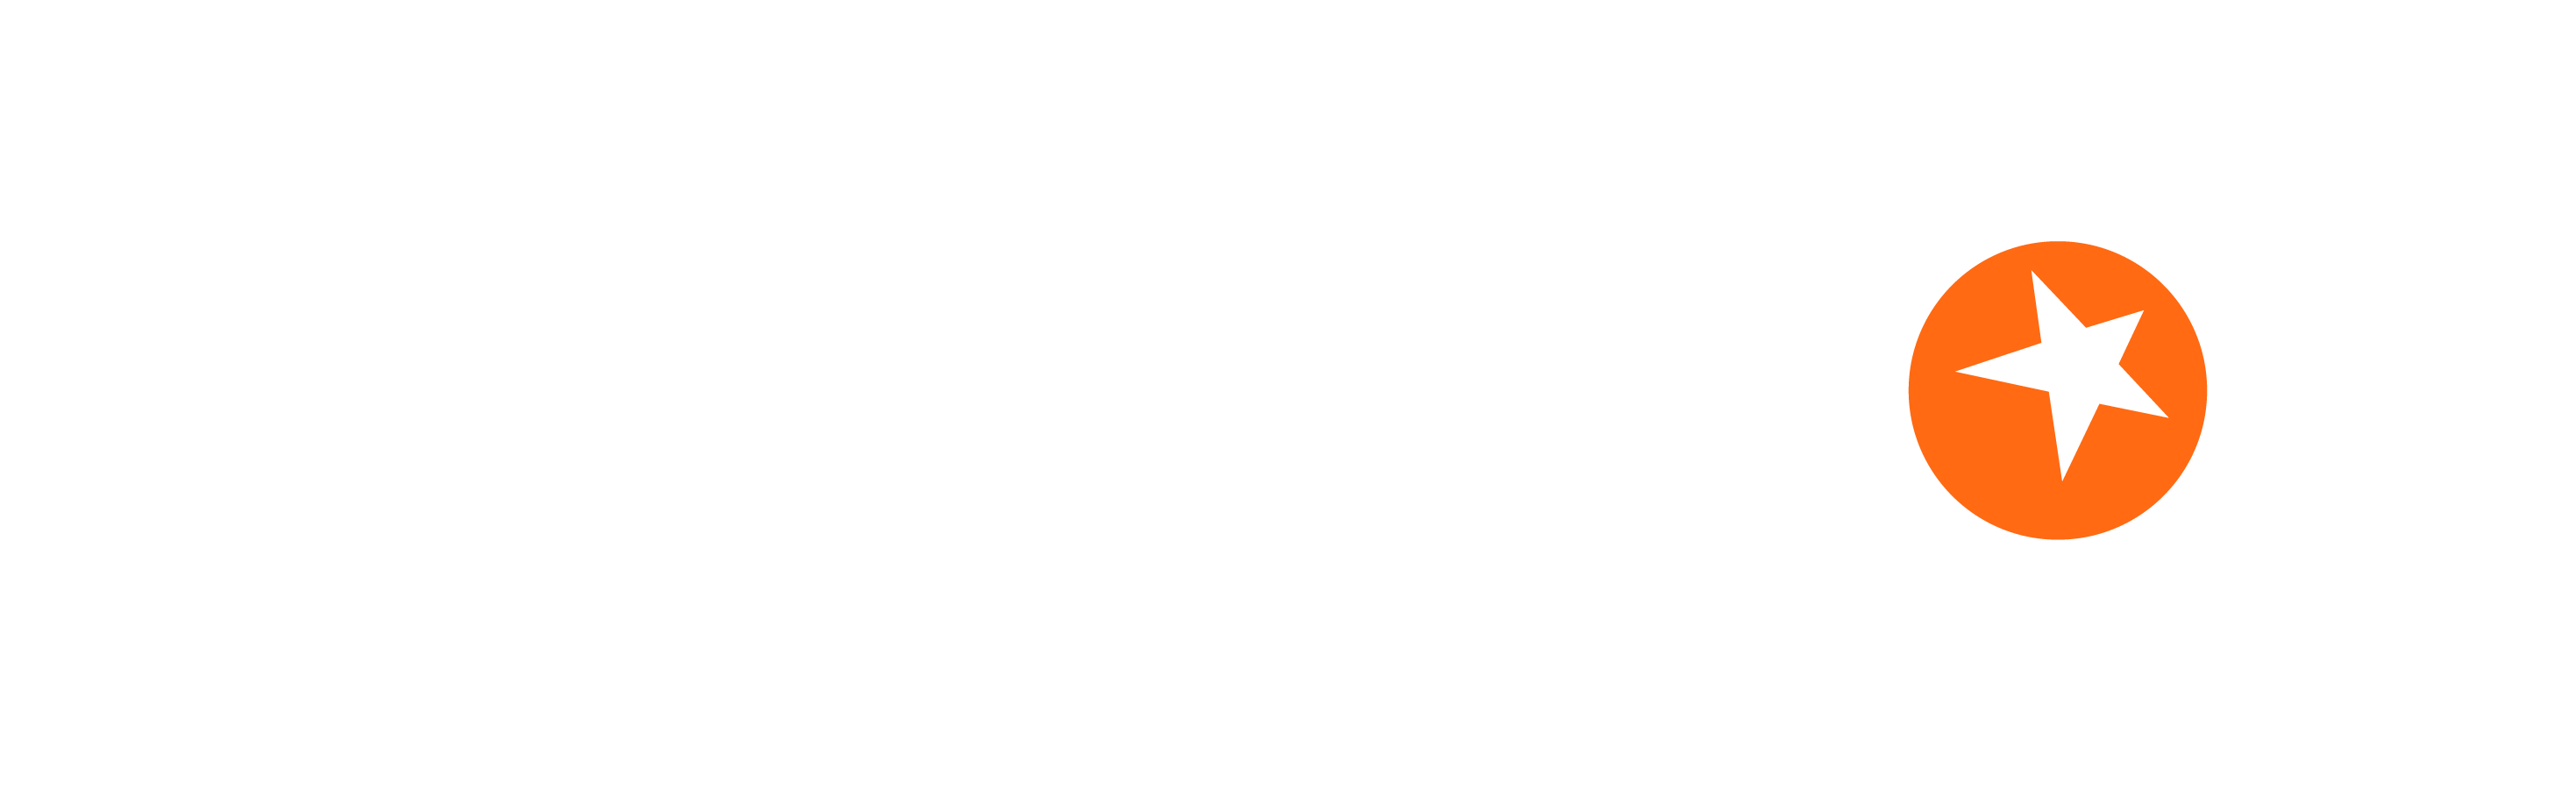 causeway_logo_white-01